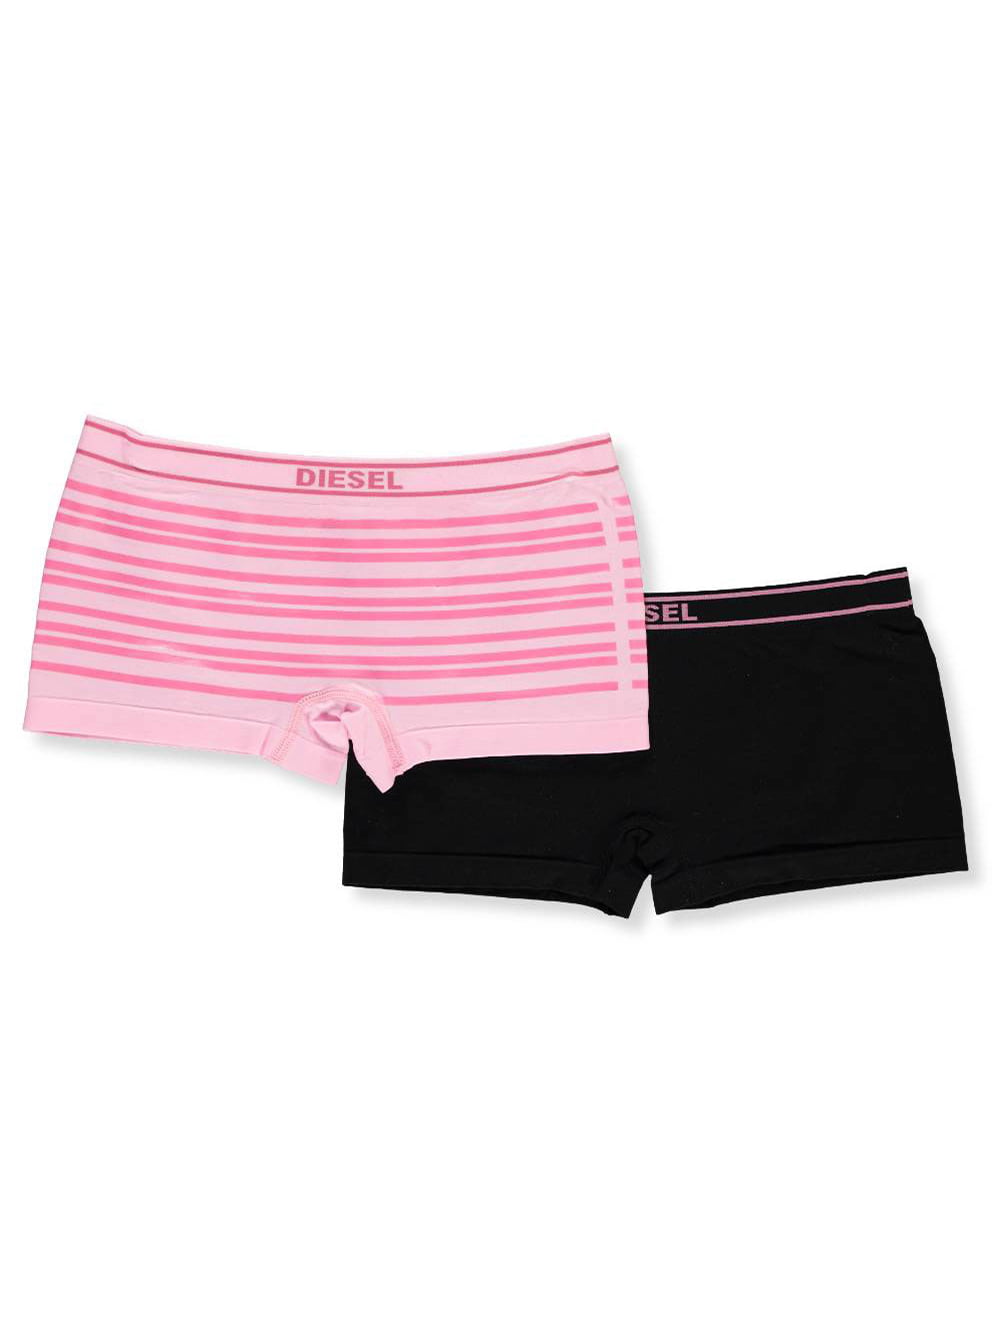 Diesel Girls' 2-Pack Boy Shorts Panties - black/pink, 6 - 7 (Little Girls)  